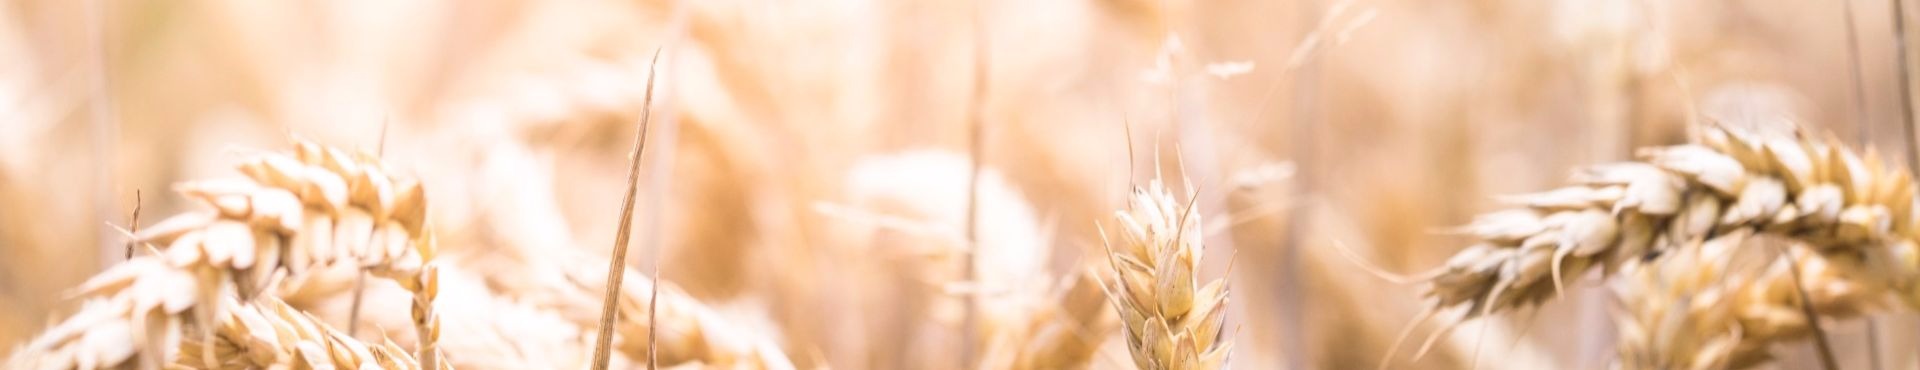 golden field of wheat, biblical, fasting symbol